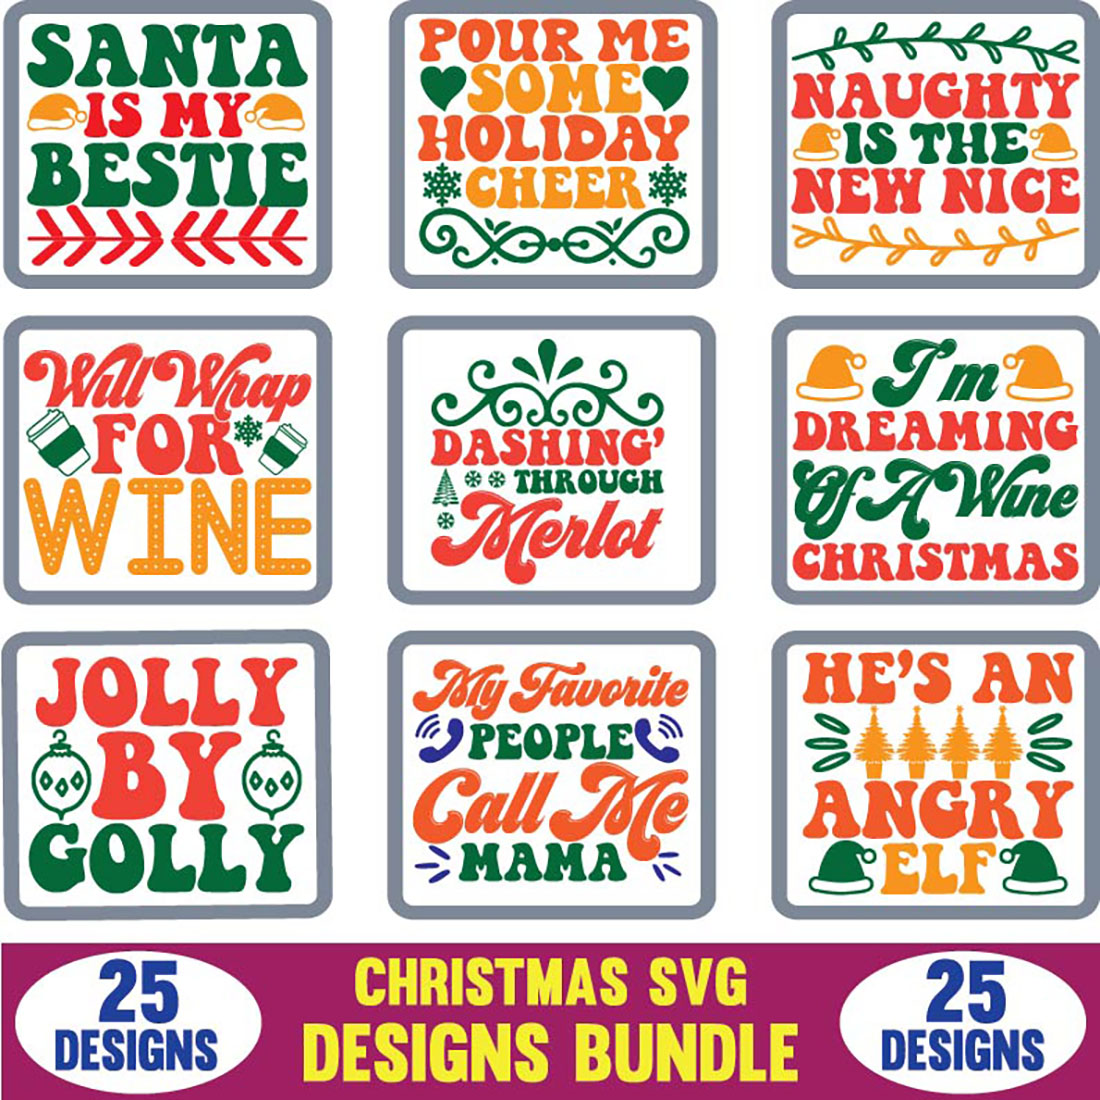 Christmas SVG Designs Bundle main image.